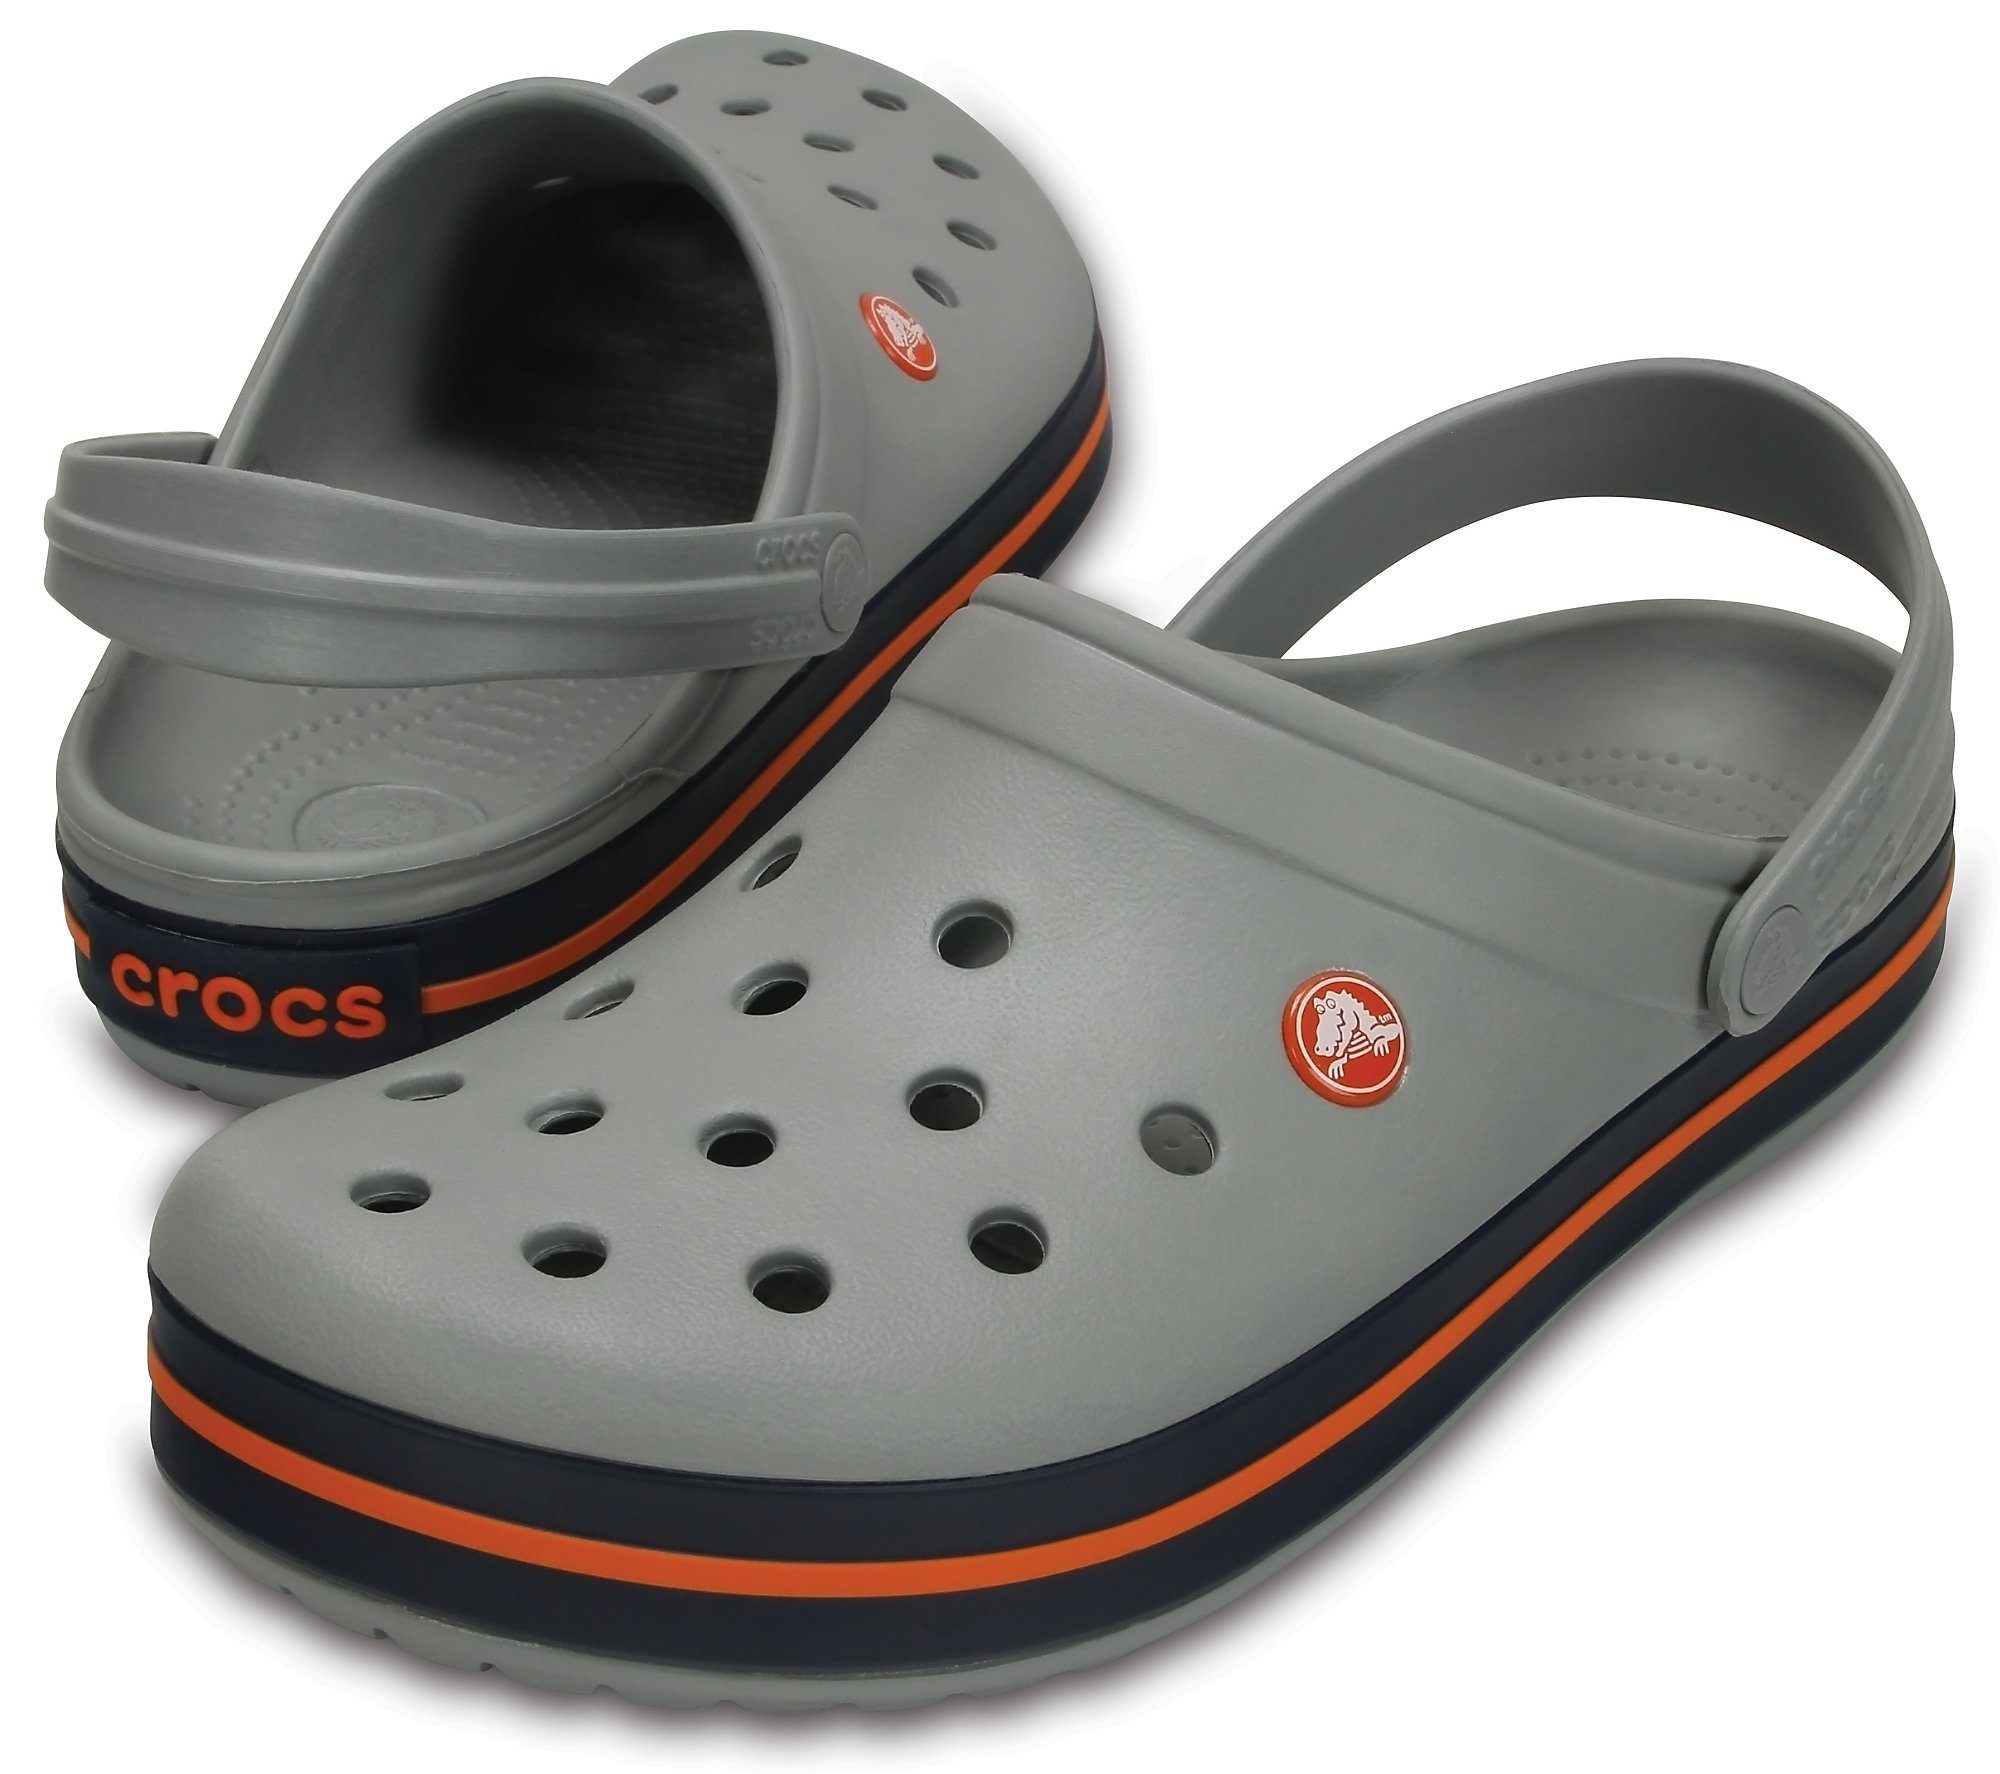 Crocs Laufsohle Crocband mit Clog grau-schwarz-orange farbiger